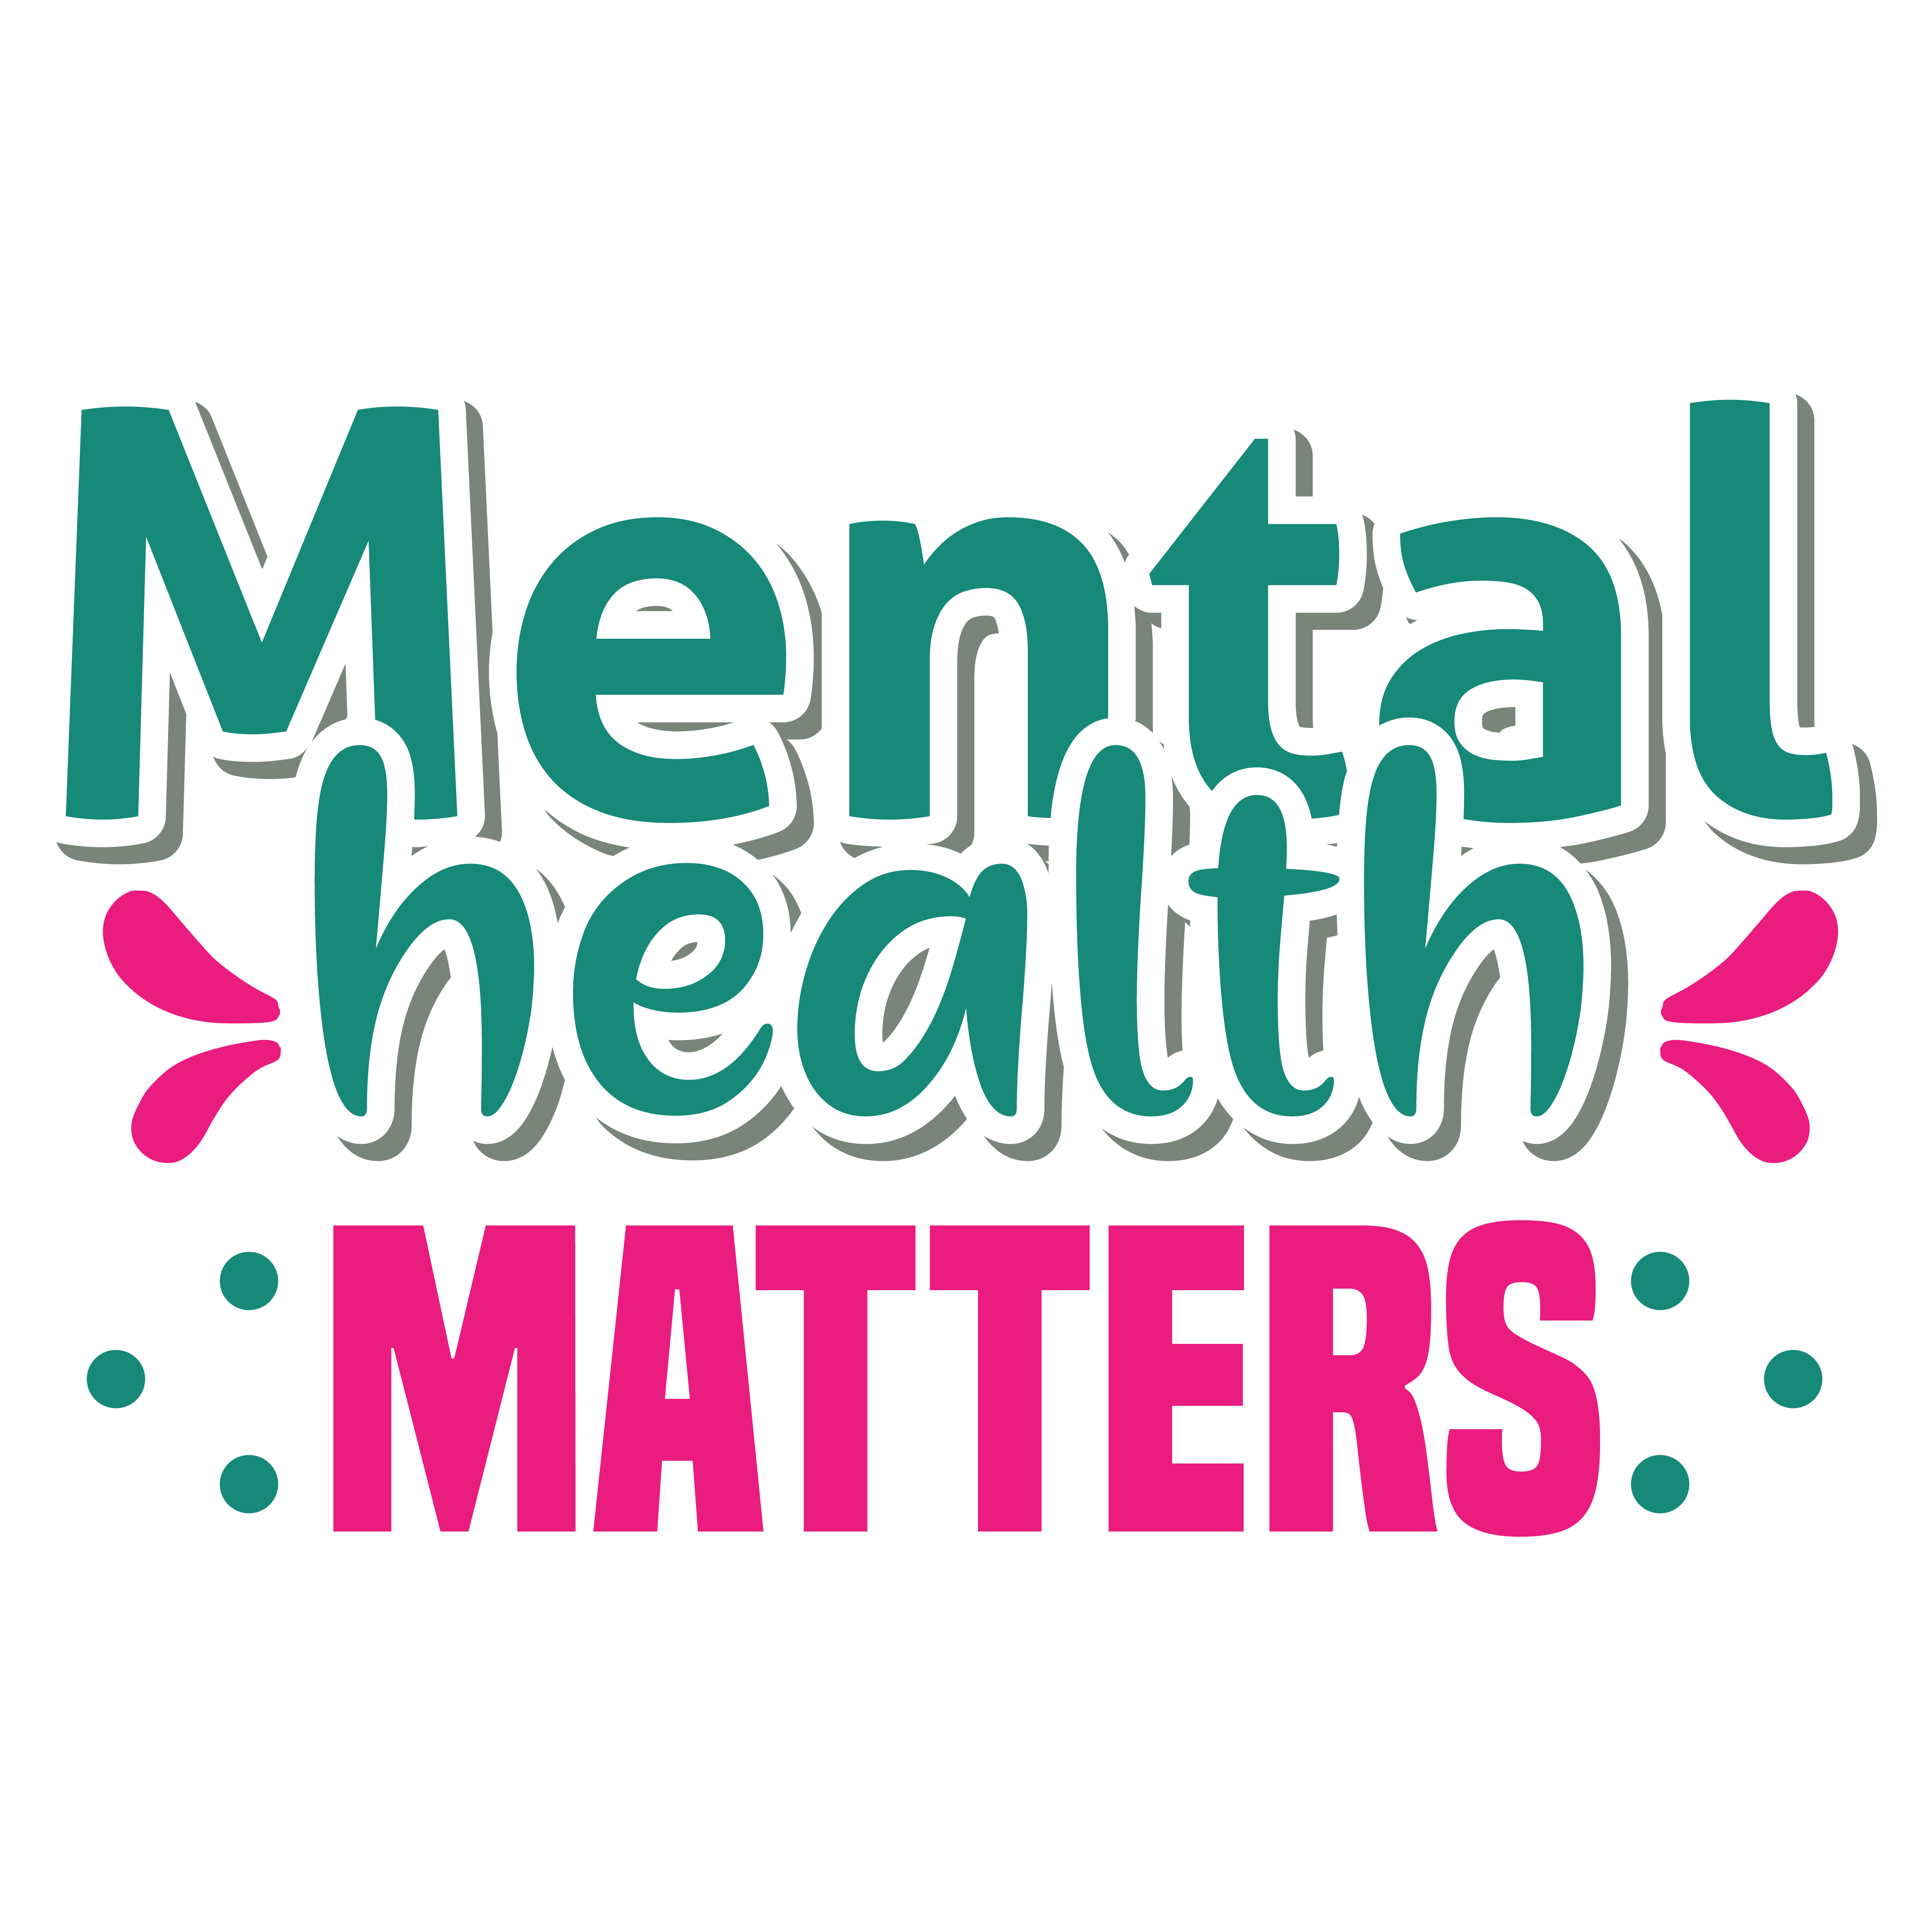 Mental Health Matters